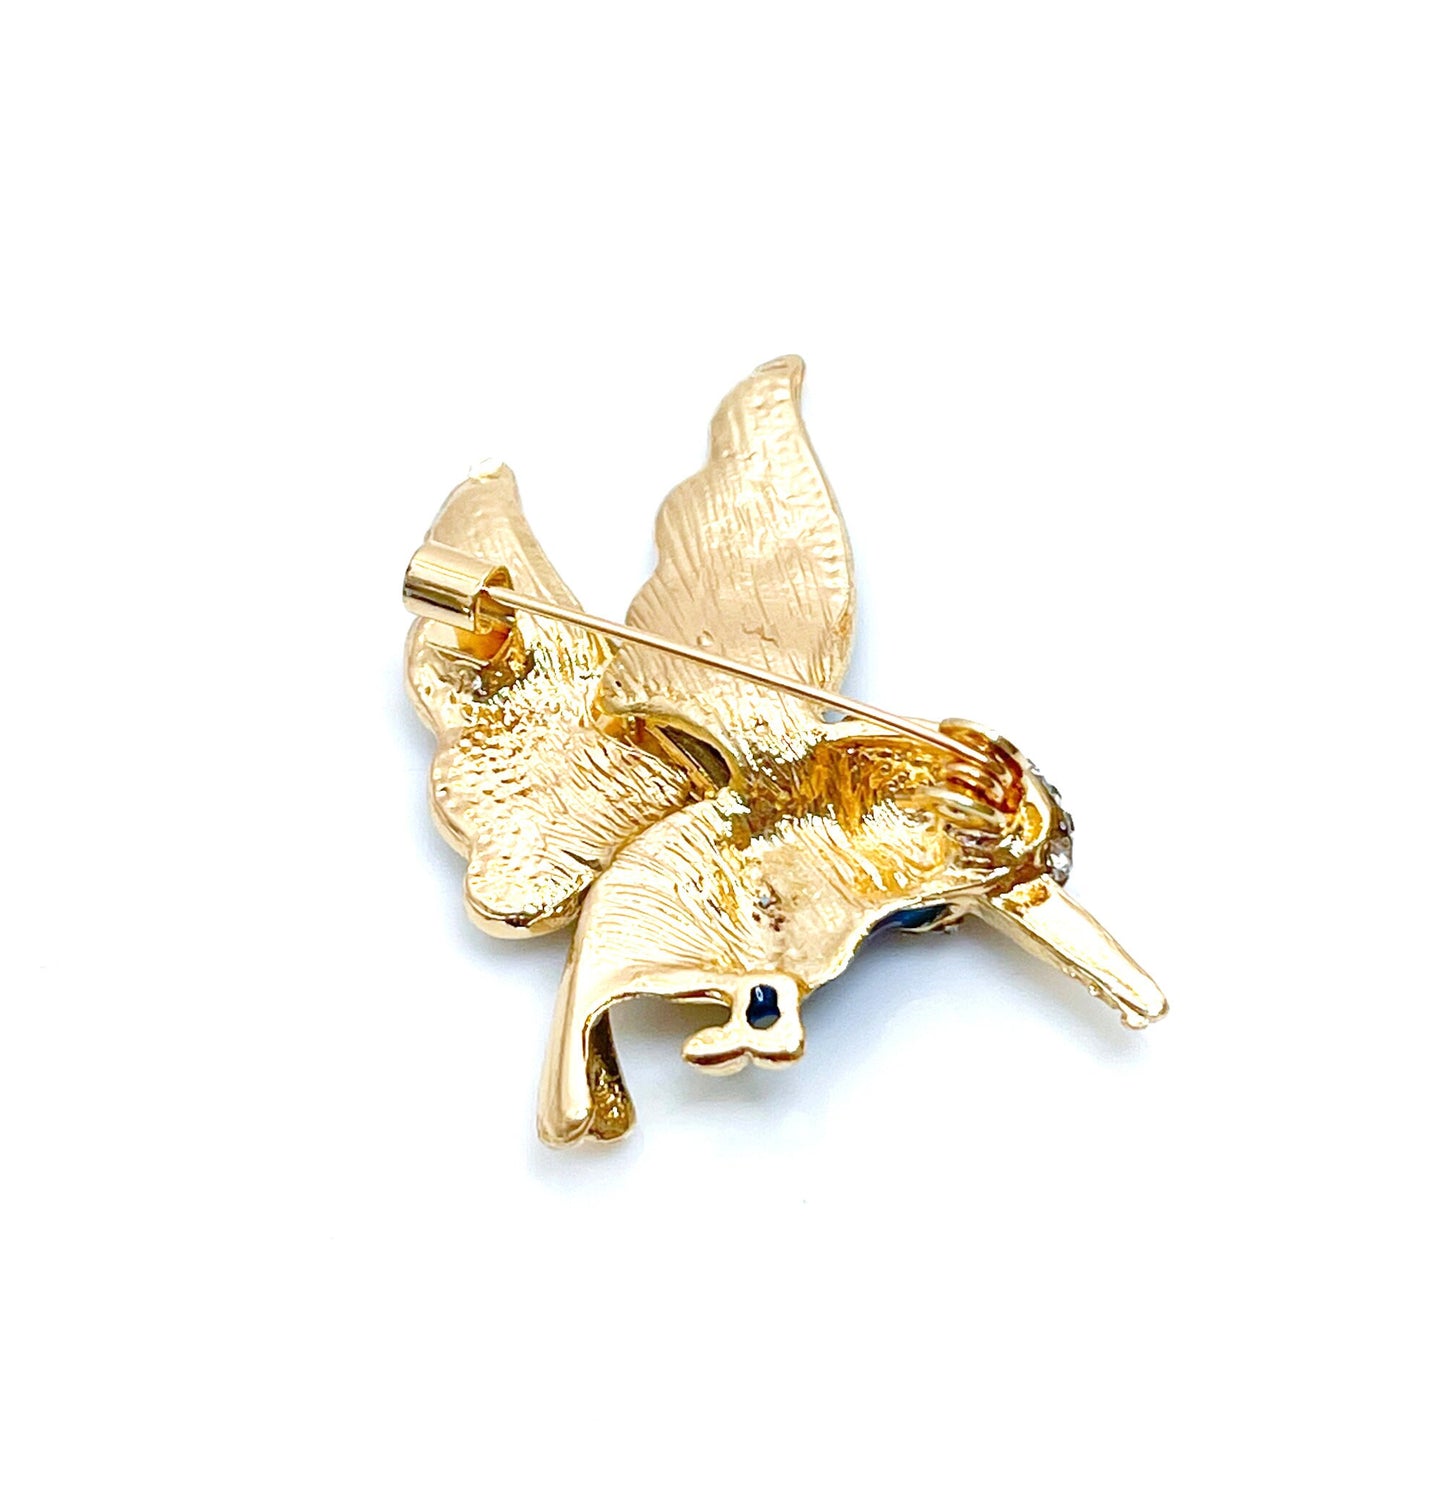 Red Hummingbird Brooch | Gift for Bird Lovers | Red and Gold Hummingbird | Cute Bird Pin